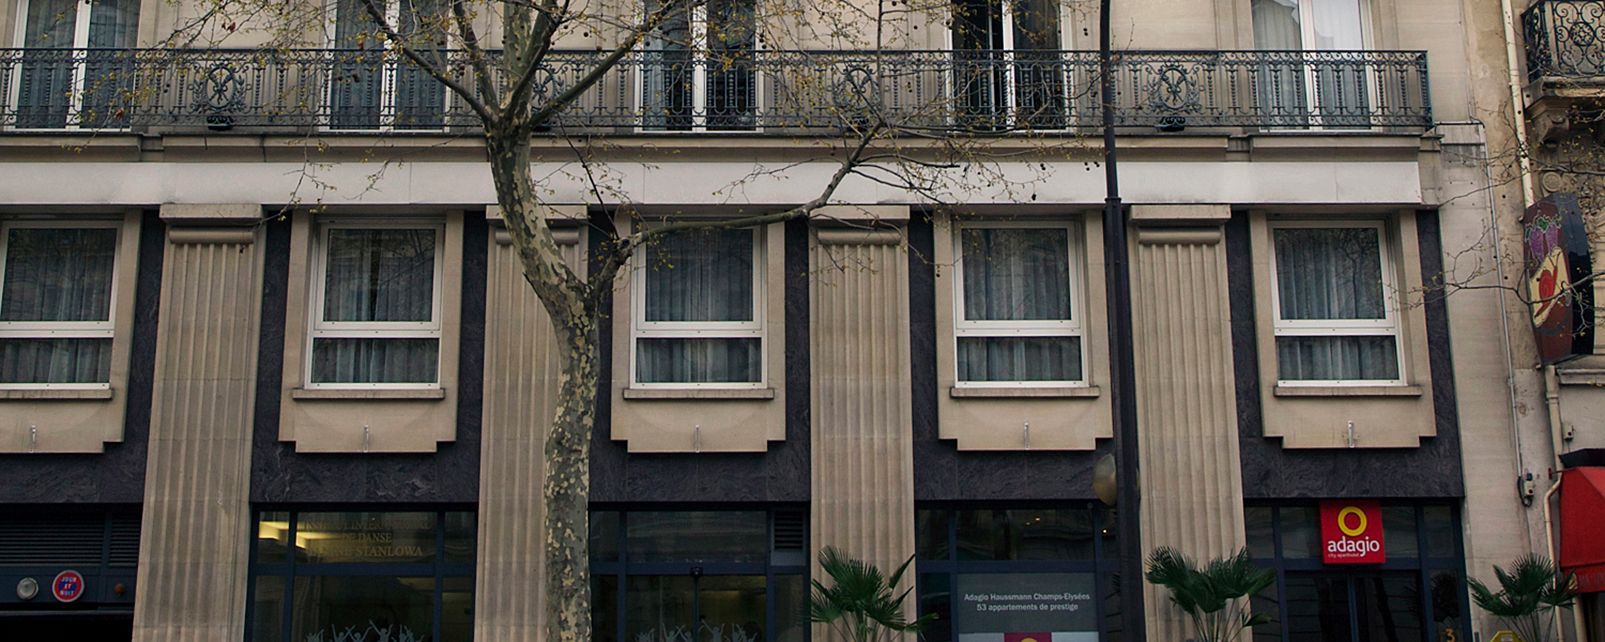 Hotel Adagio City Aparthotel Haussmann Champs-Elysees